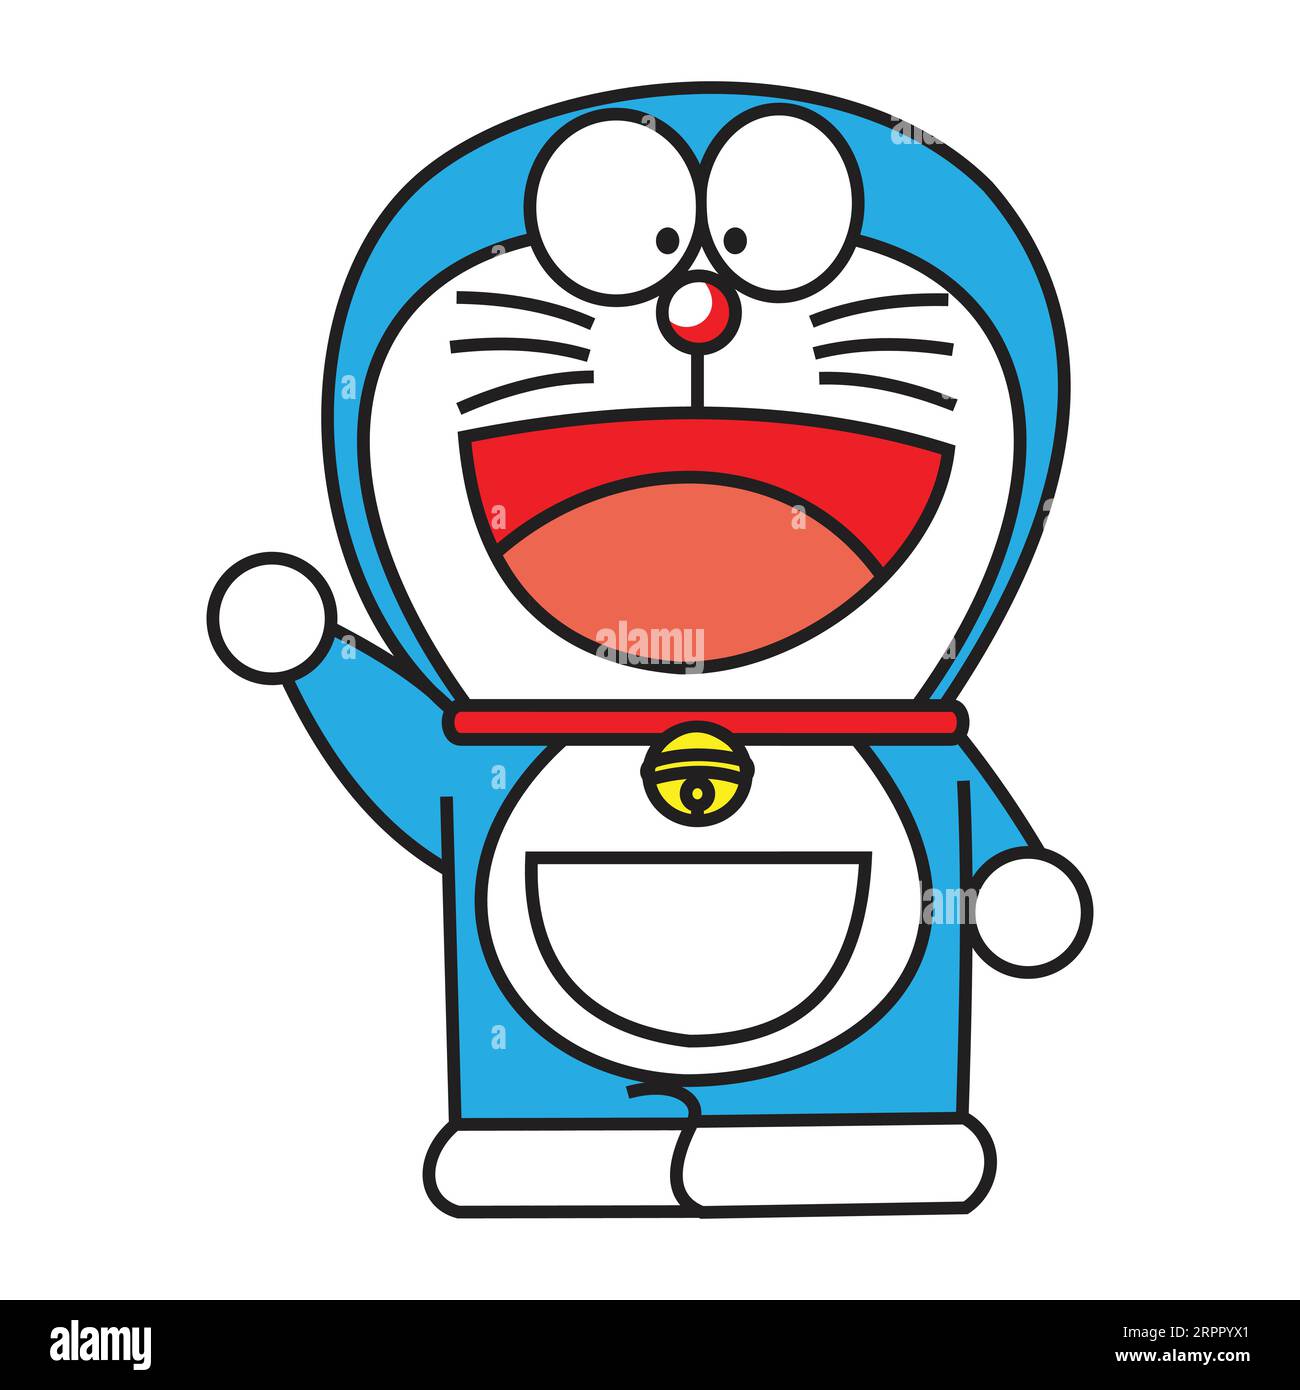 Learn How to Draw Doraemon (Doraemon) Step by Step : Drawing Tutorials |  Doraemon, Cartoon art drawing, Drawings